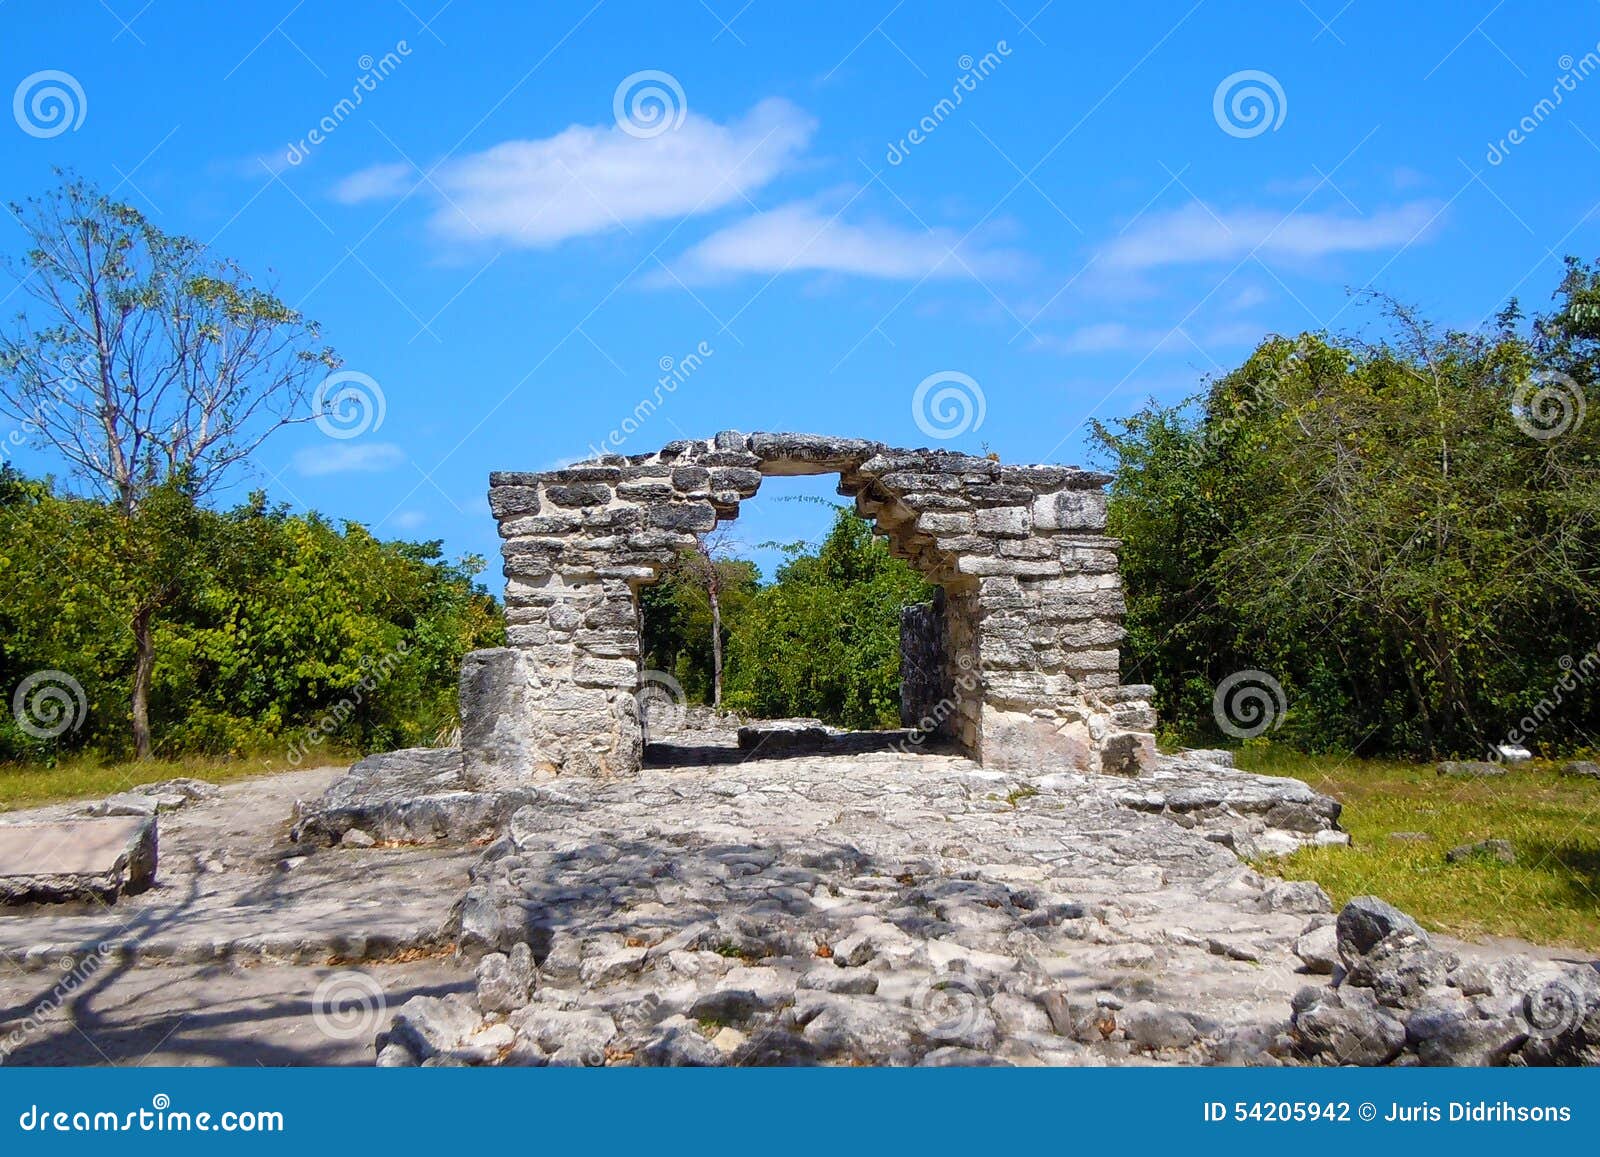 mayan ruins of cozumel